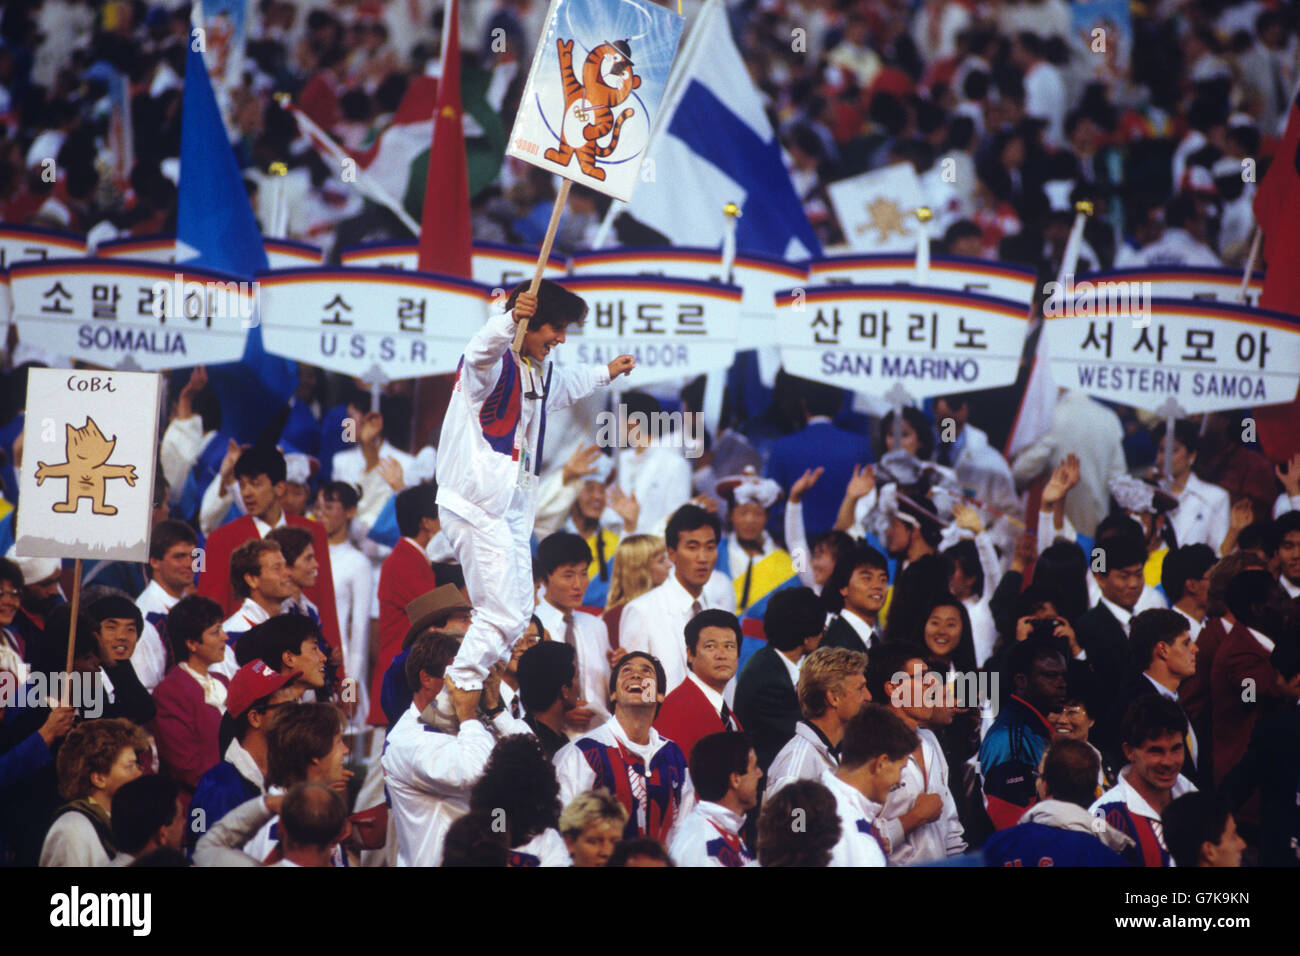 Los Angeles Olympics 1984 - Closing Ceremony. The closing ceremony at the 1984 Olympic Games in Los Angeles. Stock Photo